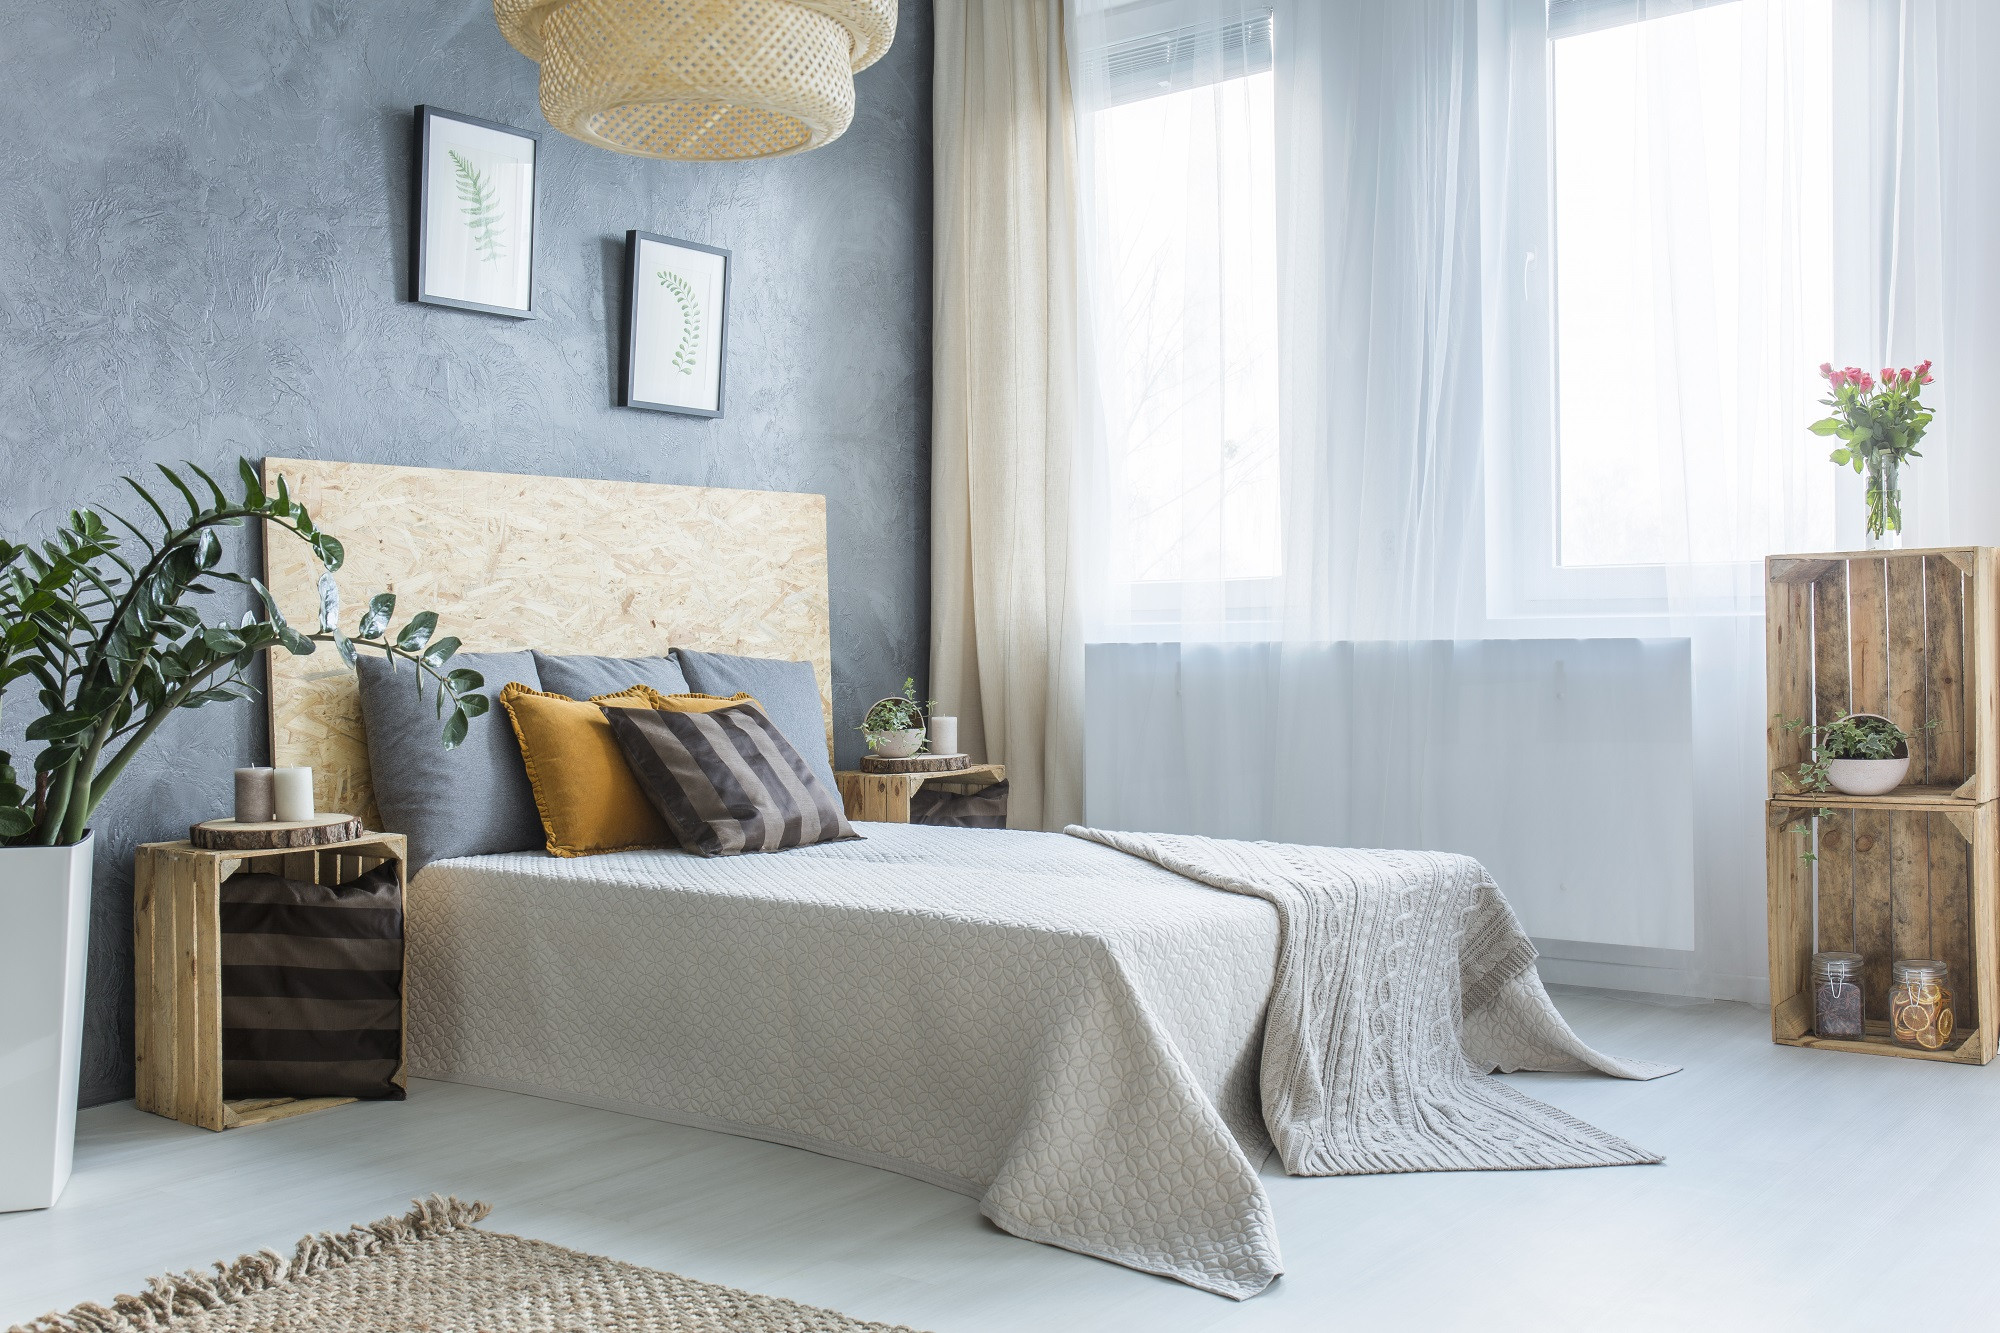 Bedroom Decorating Ideas
 Bedroom Ideas 52 Modern Design Ideas for your Bedroom